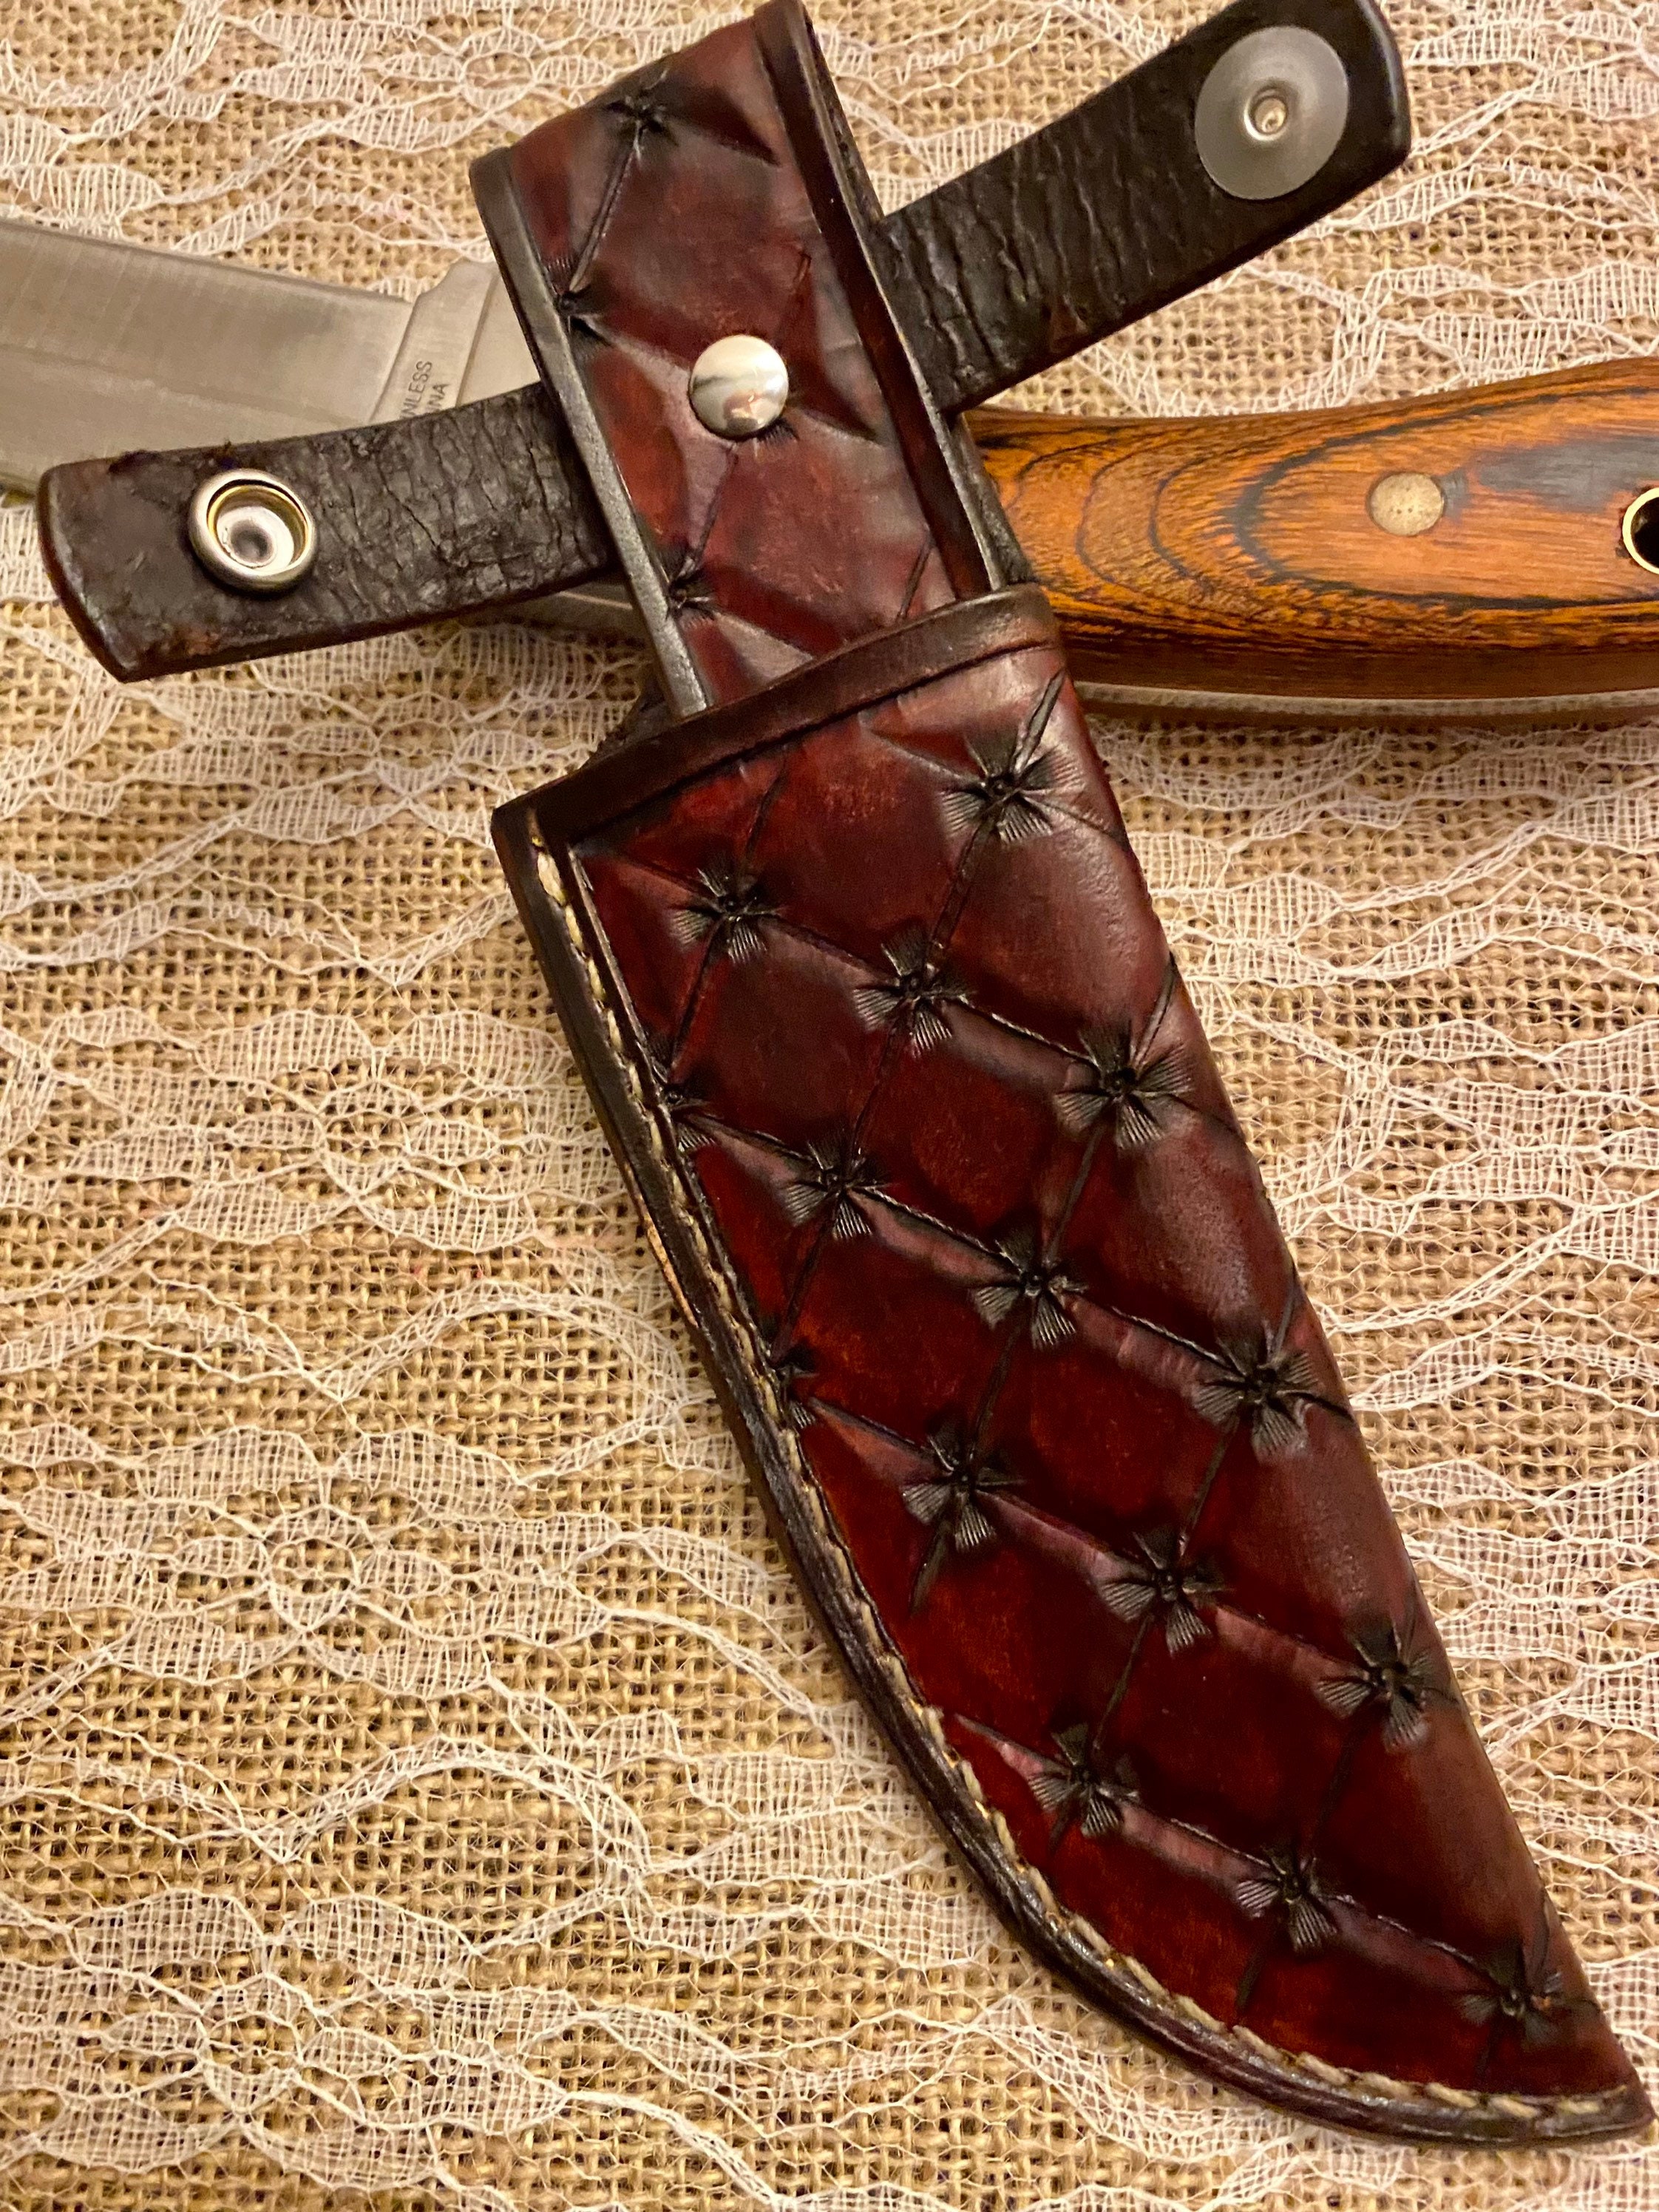 9 long custom handmade leather sheath for 5—5.5 cutting blade knife